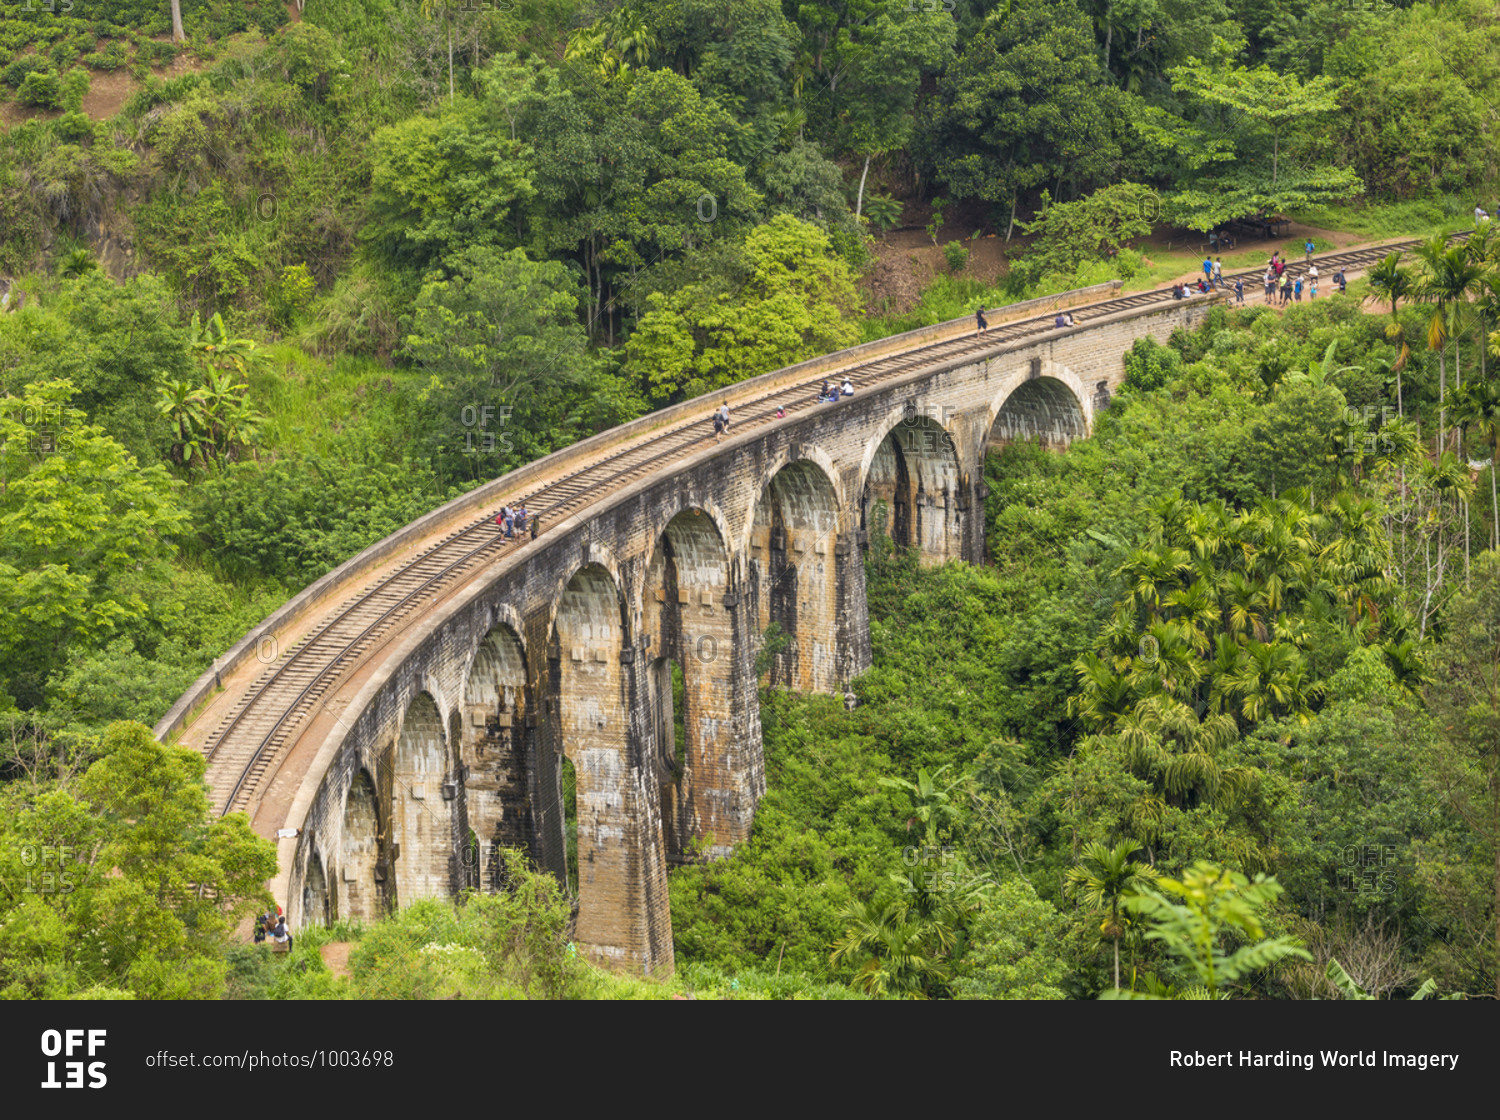 Nine Arches Bridge, Ella, Uva Province, Sri Lanka, Asia